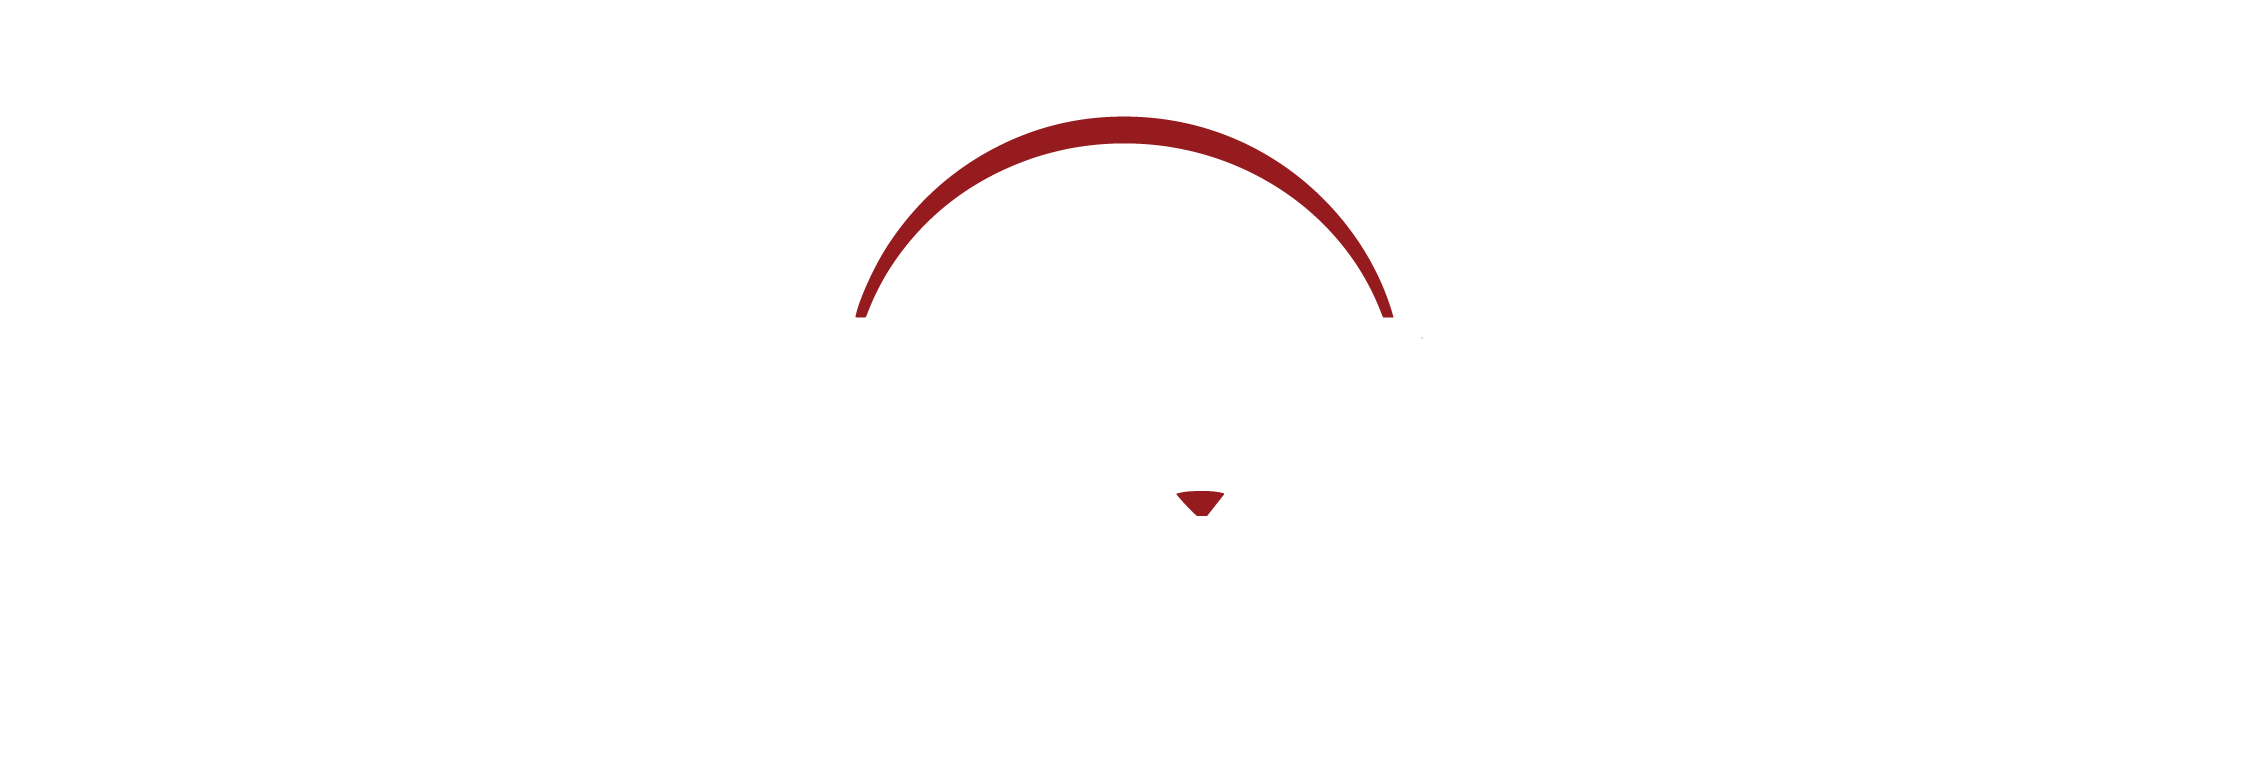 Avto Cajka Logo